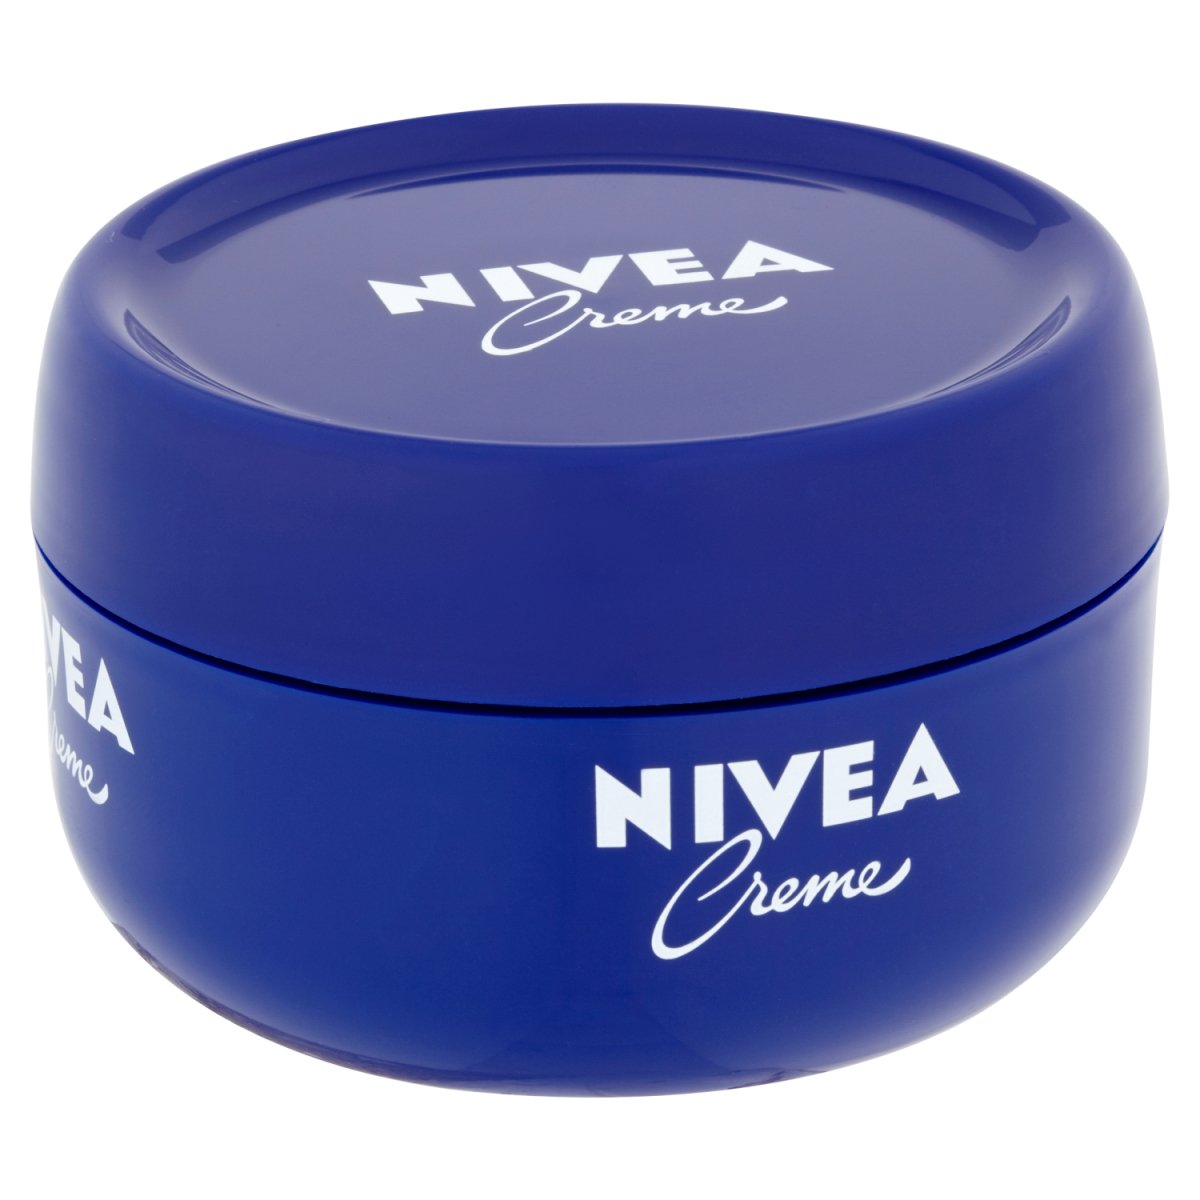 Nivea Creme 200ml - Intamarque - Wholesale 5025970801322